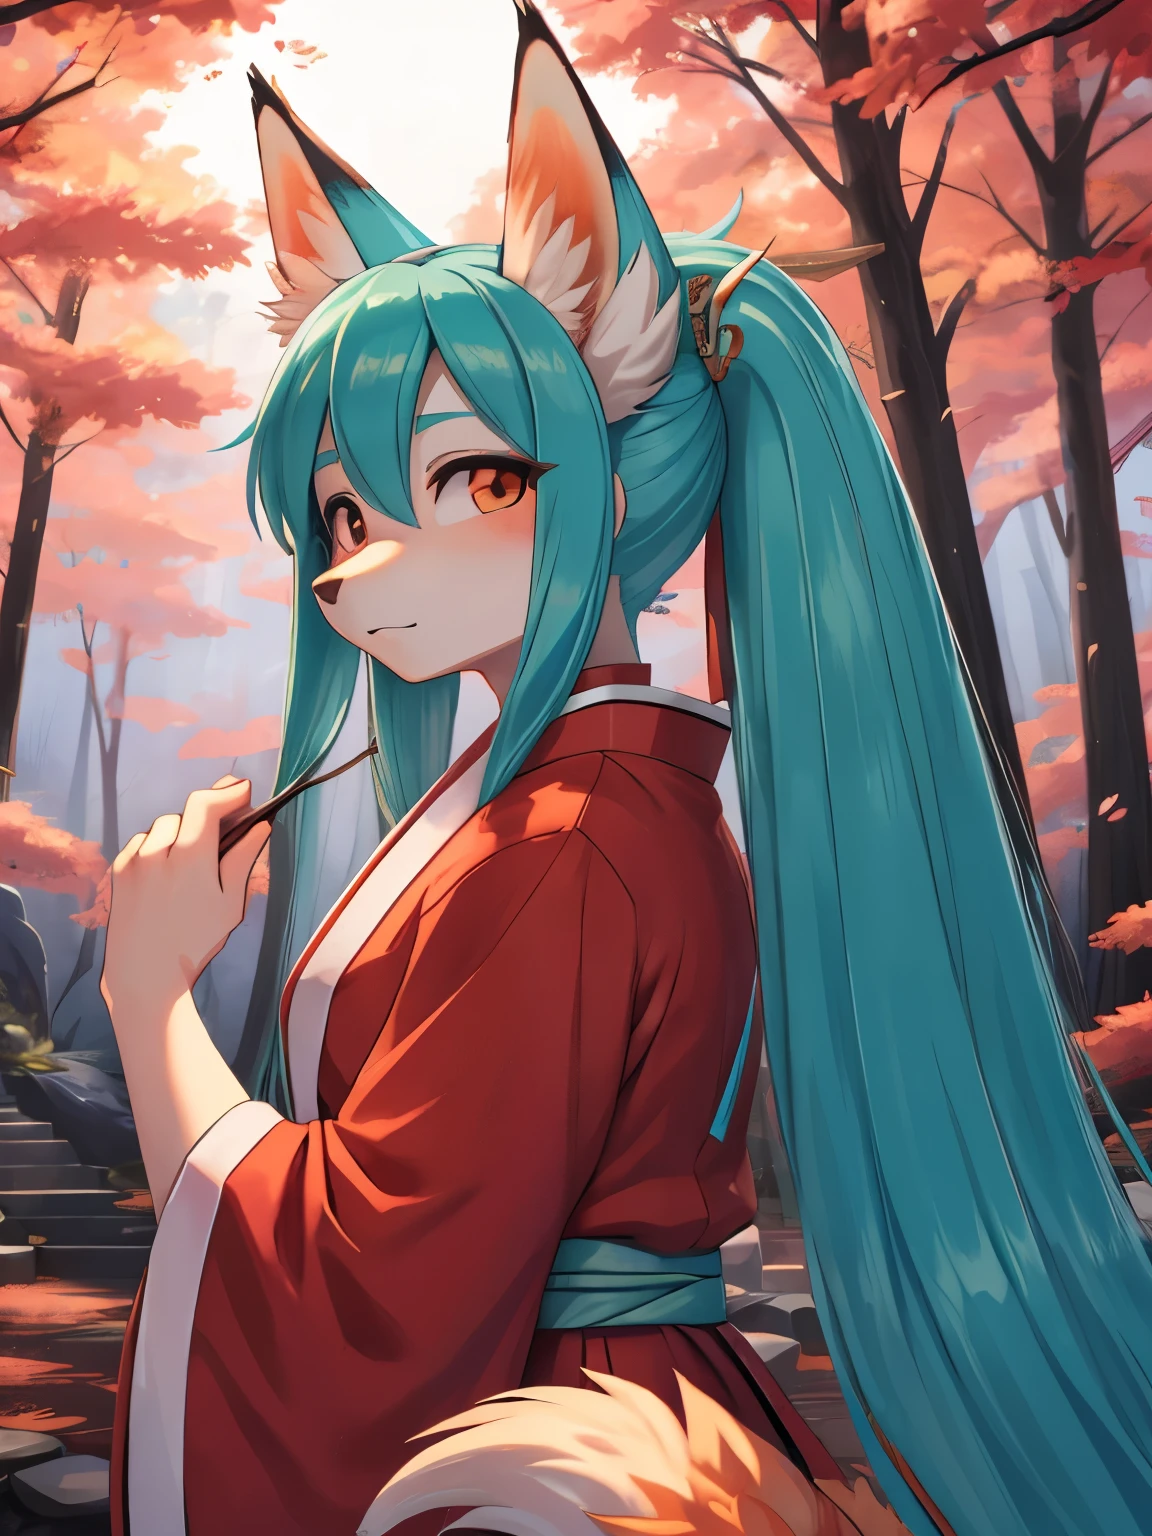 Hatsume miku,alta definicion, orejas de kitsune, vestimenta de sacerdotisa feudal japonesa, paisaje del bosque del templo japonés